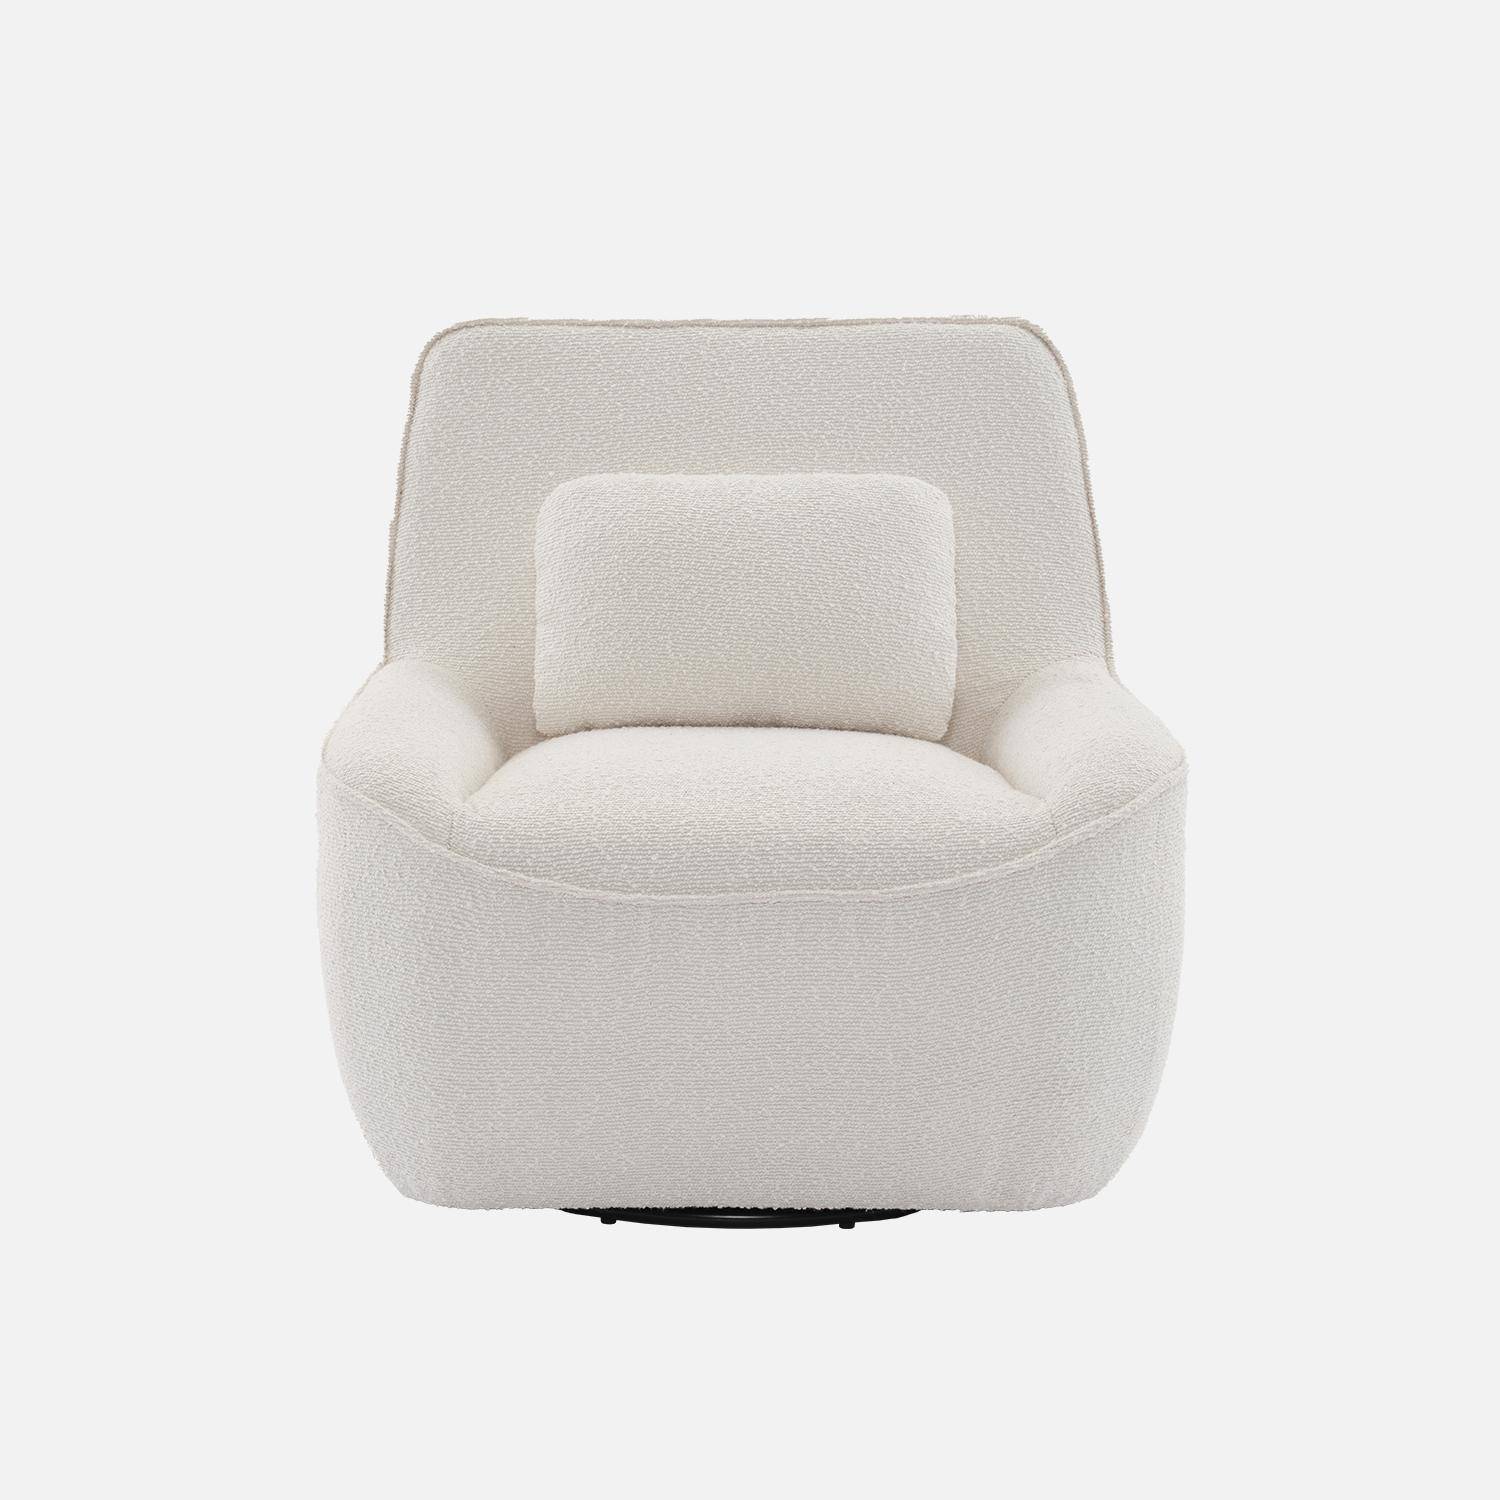 360° draaibare fauteuil in wit bouclé afneembaar kussen, Lounge, B 83 x D 83 x H 83cm,sweeek,Photo2